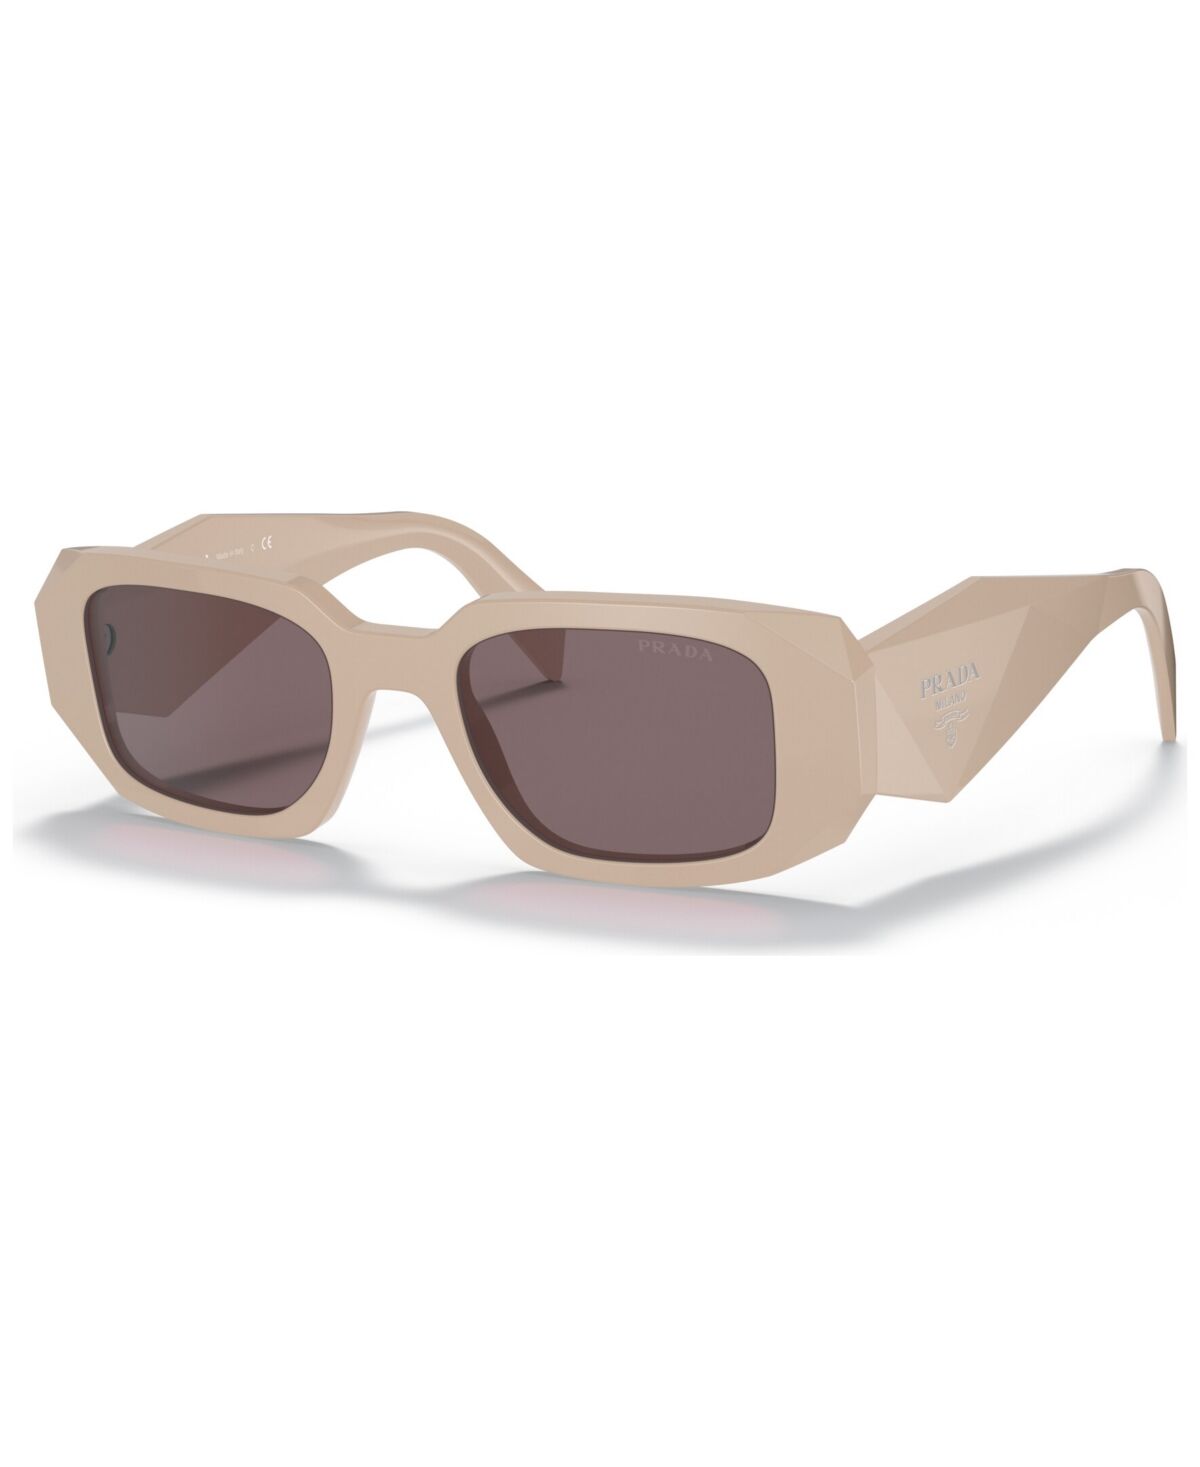 Prada Women's Sunglasses, Pr 17WS - Powder